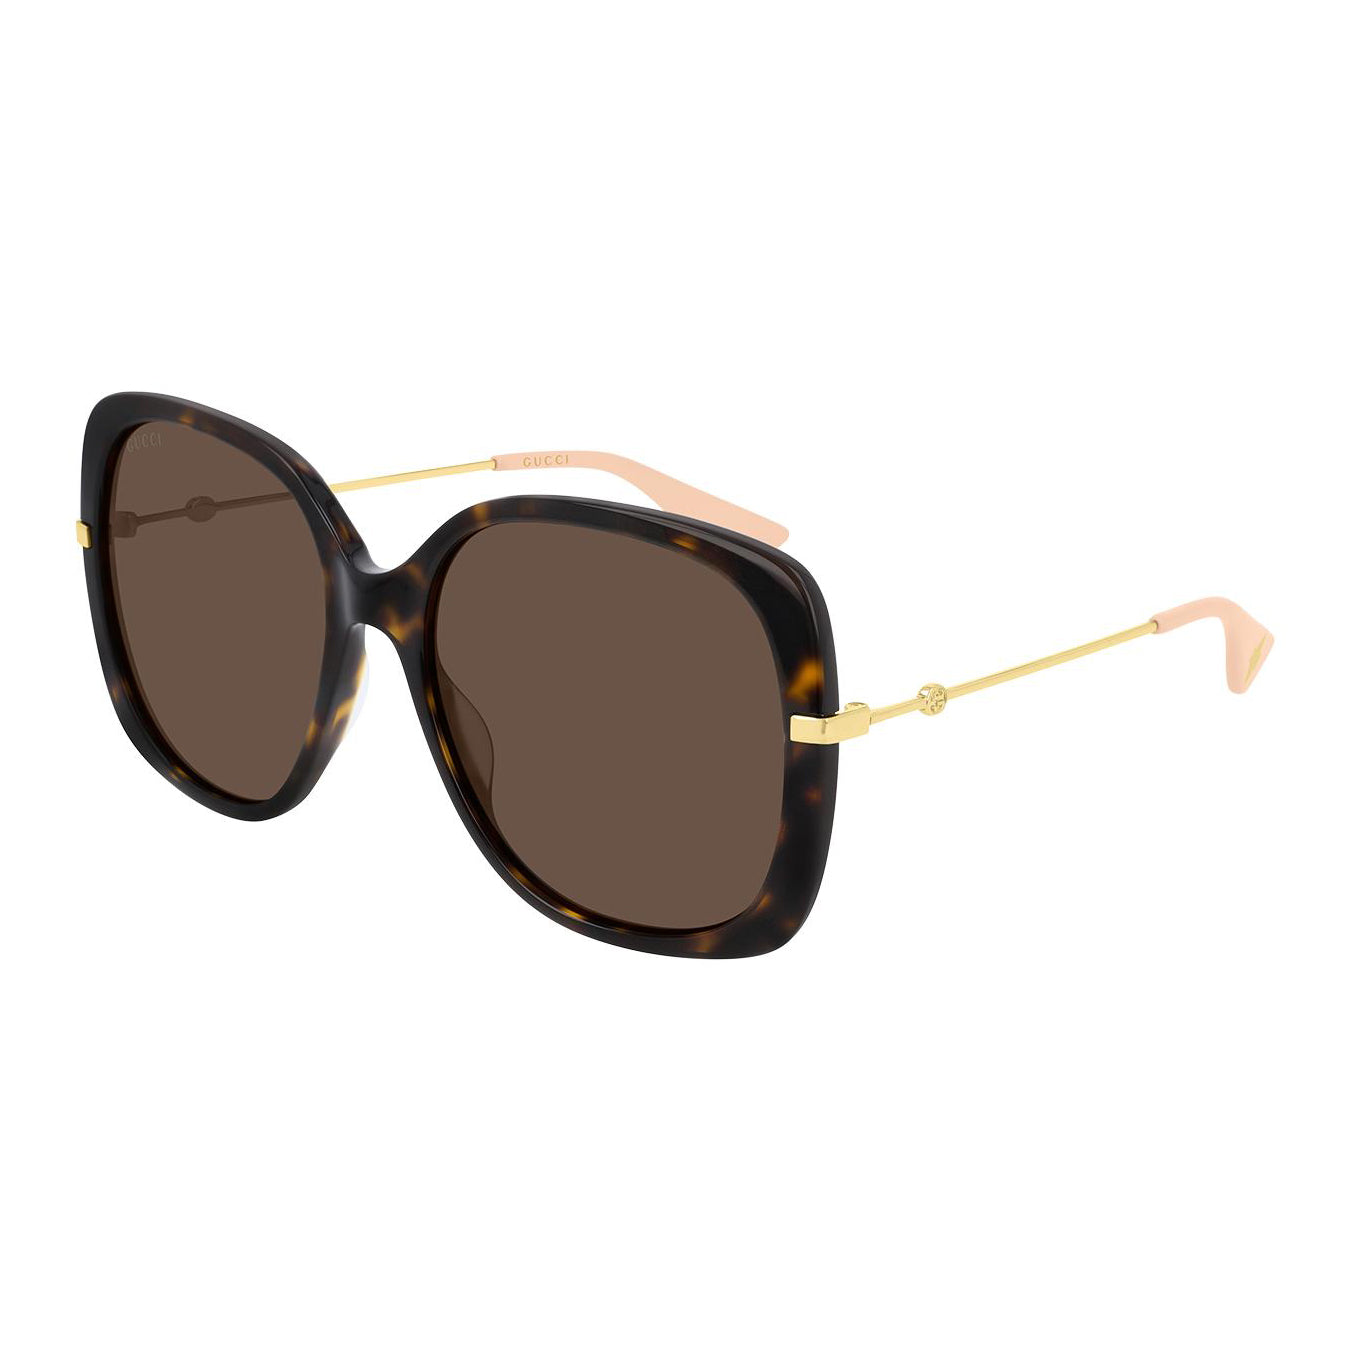 Gucci Women's Sunglasses Oversized Square Tortoise/Gold GG0511S-003 57